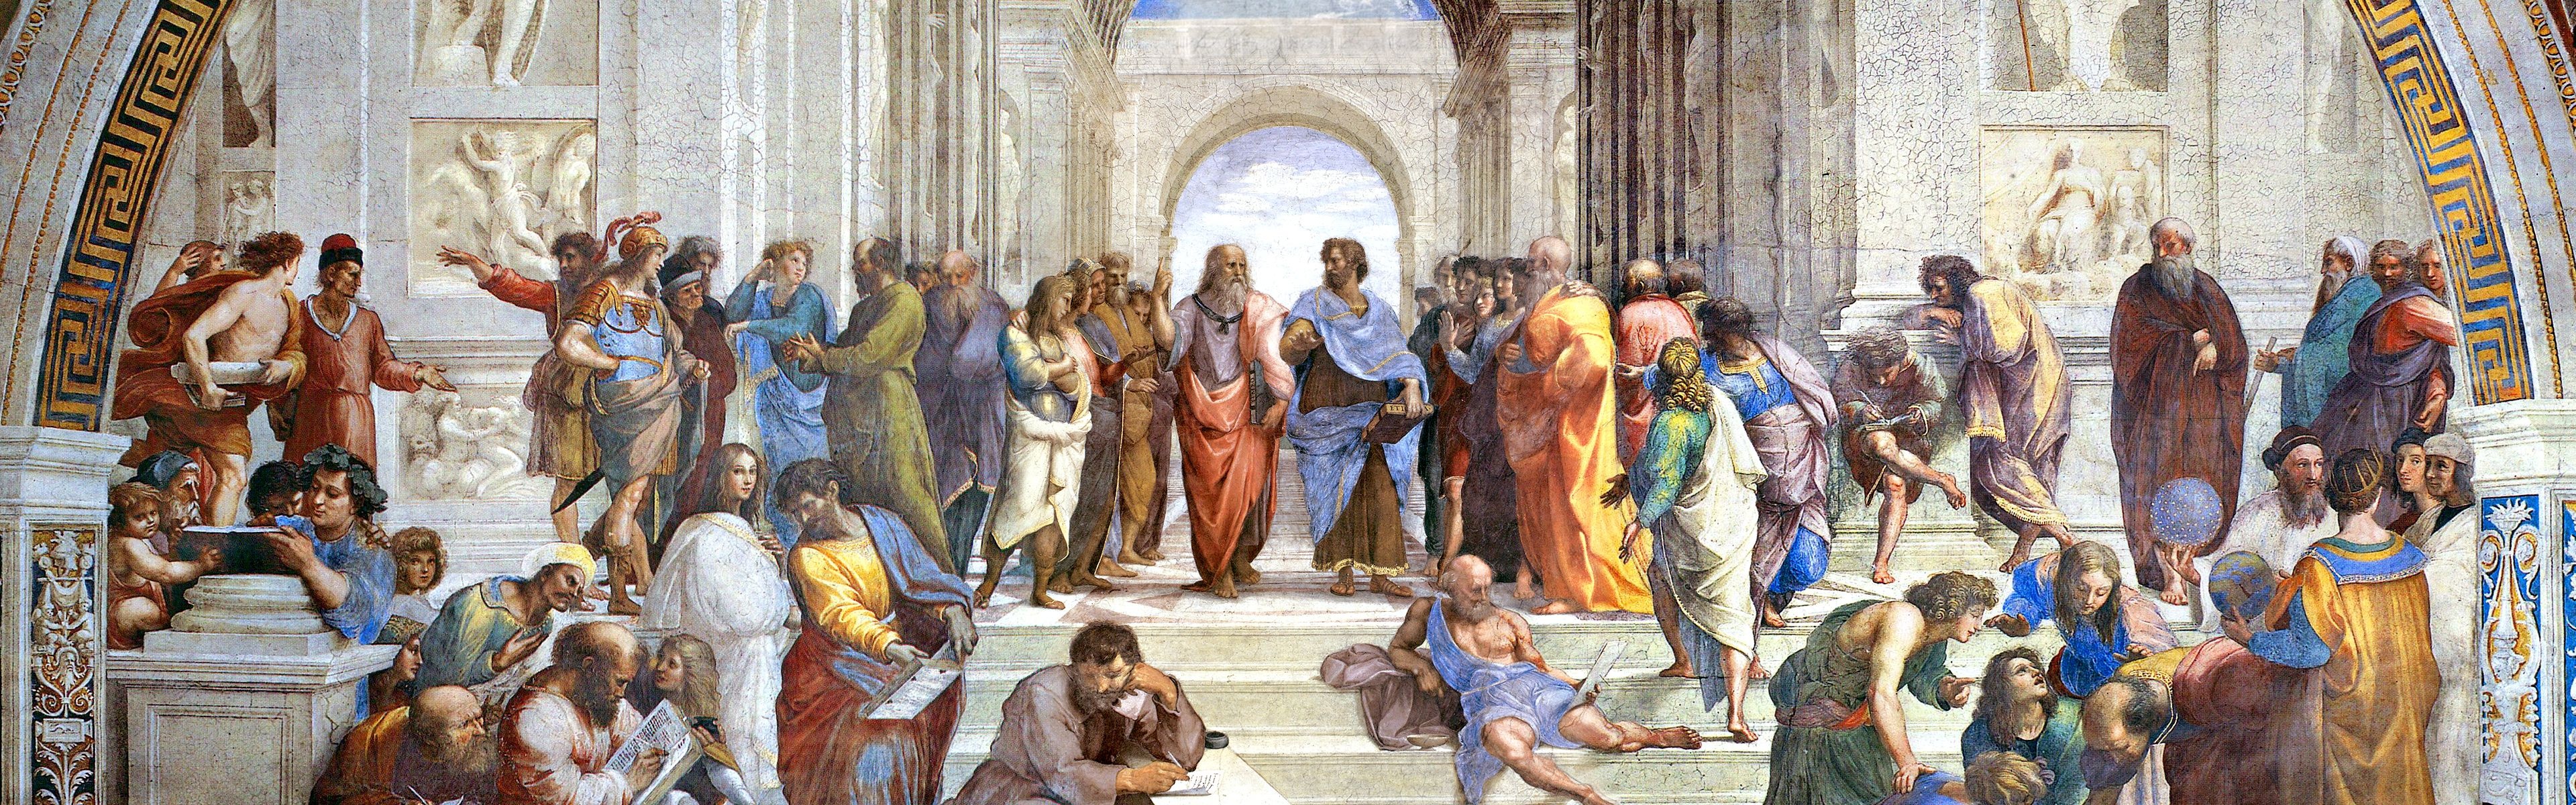 Aristotle, Philosophical insights, Intellectual pursuits, Ancient wisdom, 3840x1200 Dual Screen Desktop